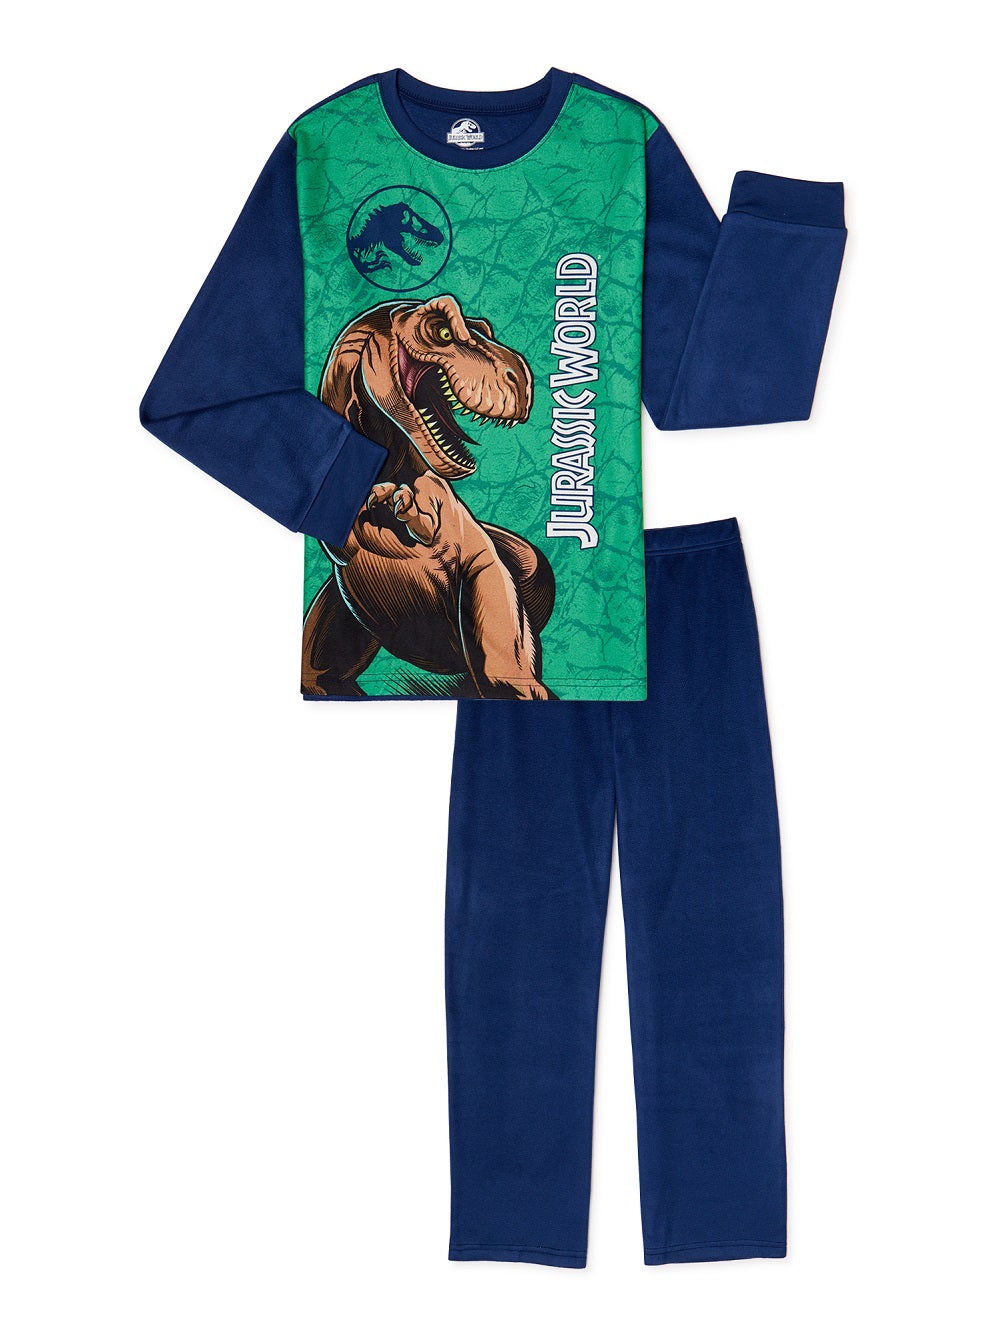 Jurassic Park Boys Pajama Set, 2-Piece, Sizes 4-12